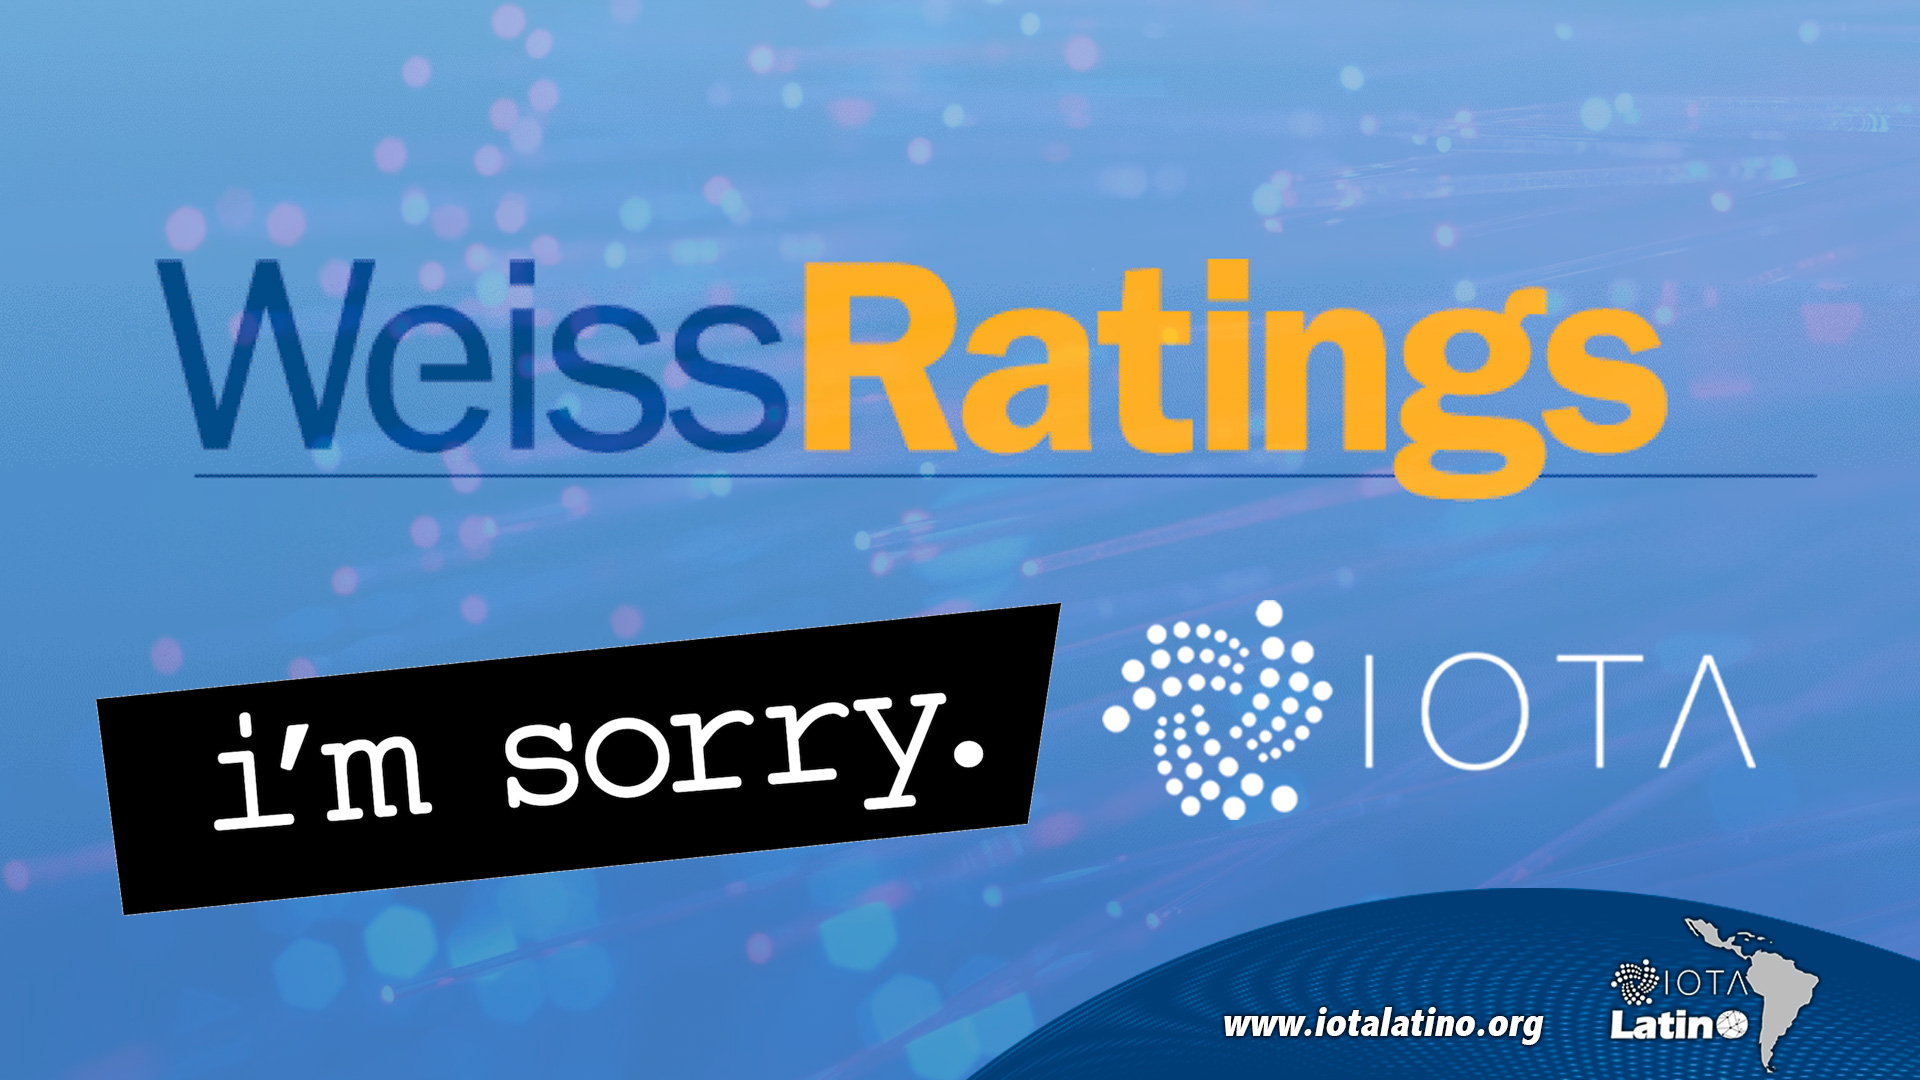 Weiss Ratings se disculpó - IOTA Latino